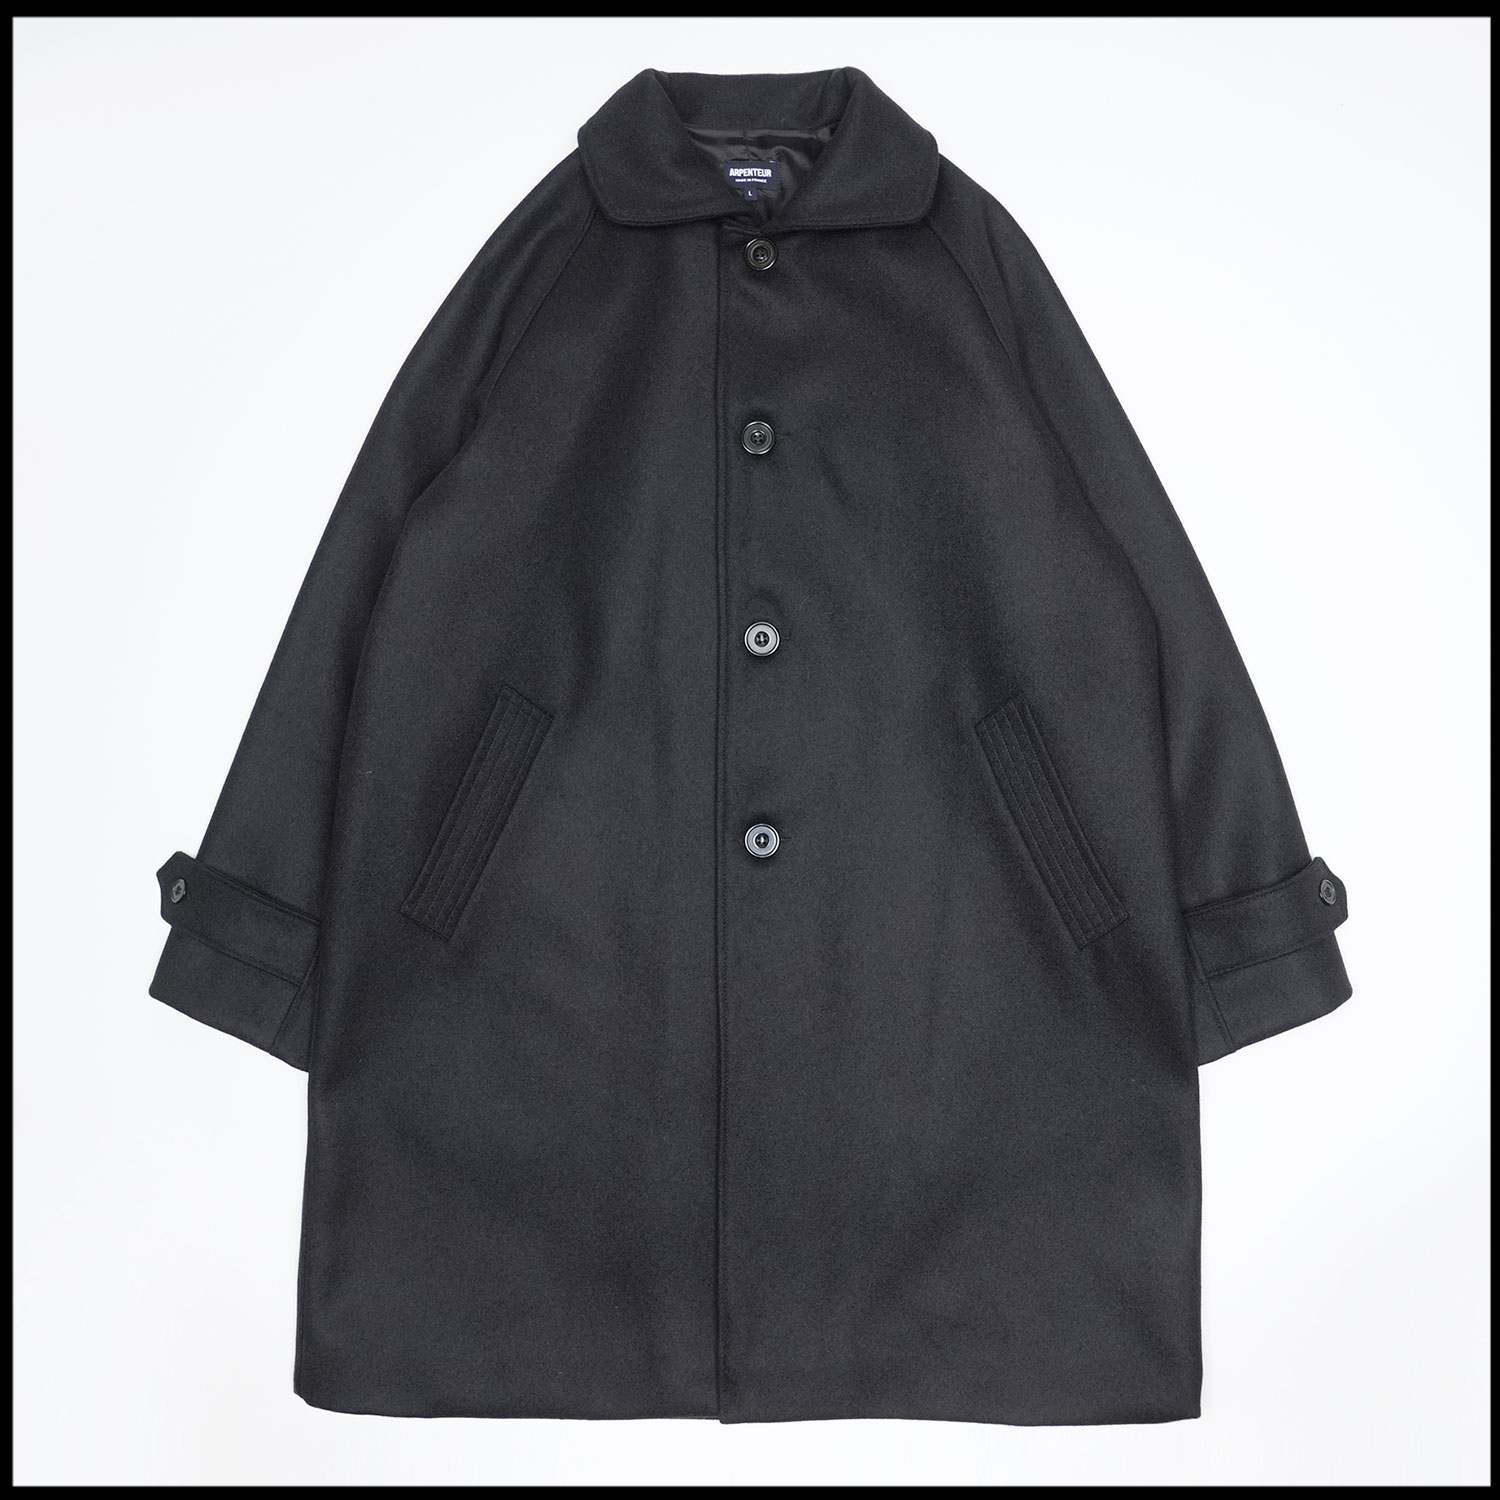 UTILE W coat in Black color by Arpenteur